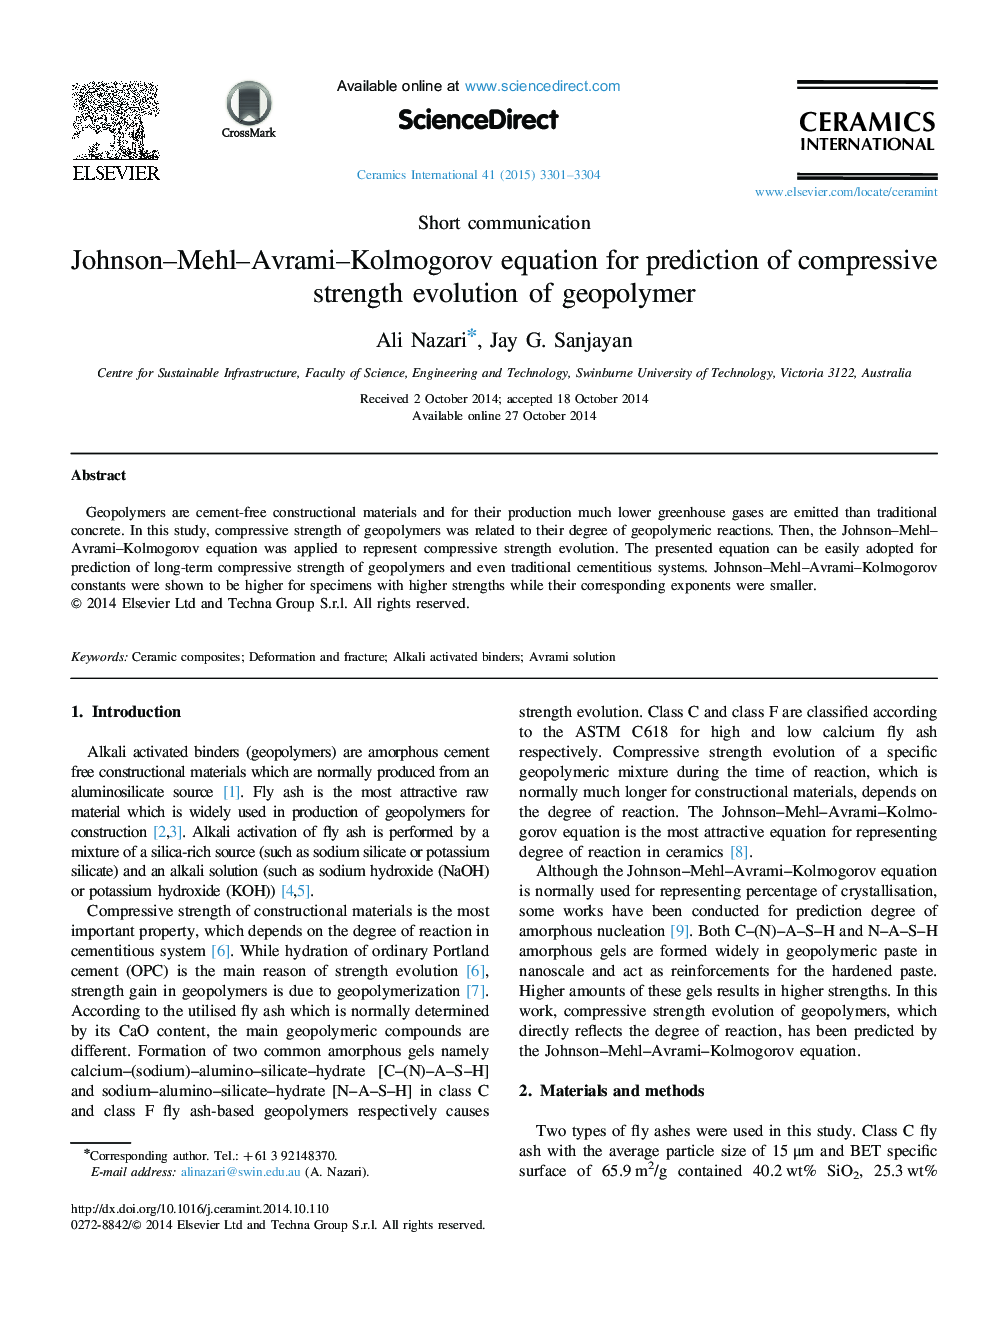 Johnson–Mehl–Avrami–Kolmogorov equation for prediction of compressive strength evolution of geopolymer